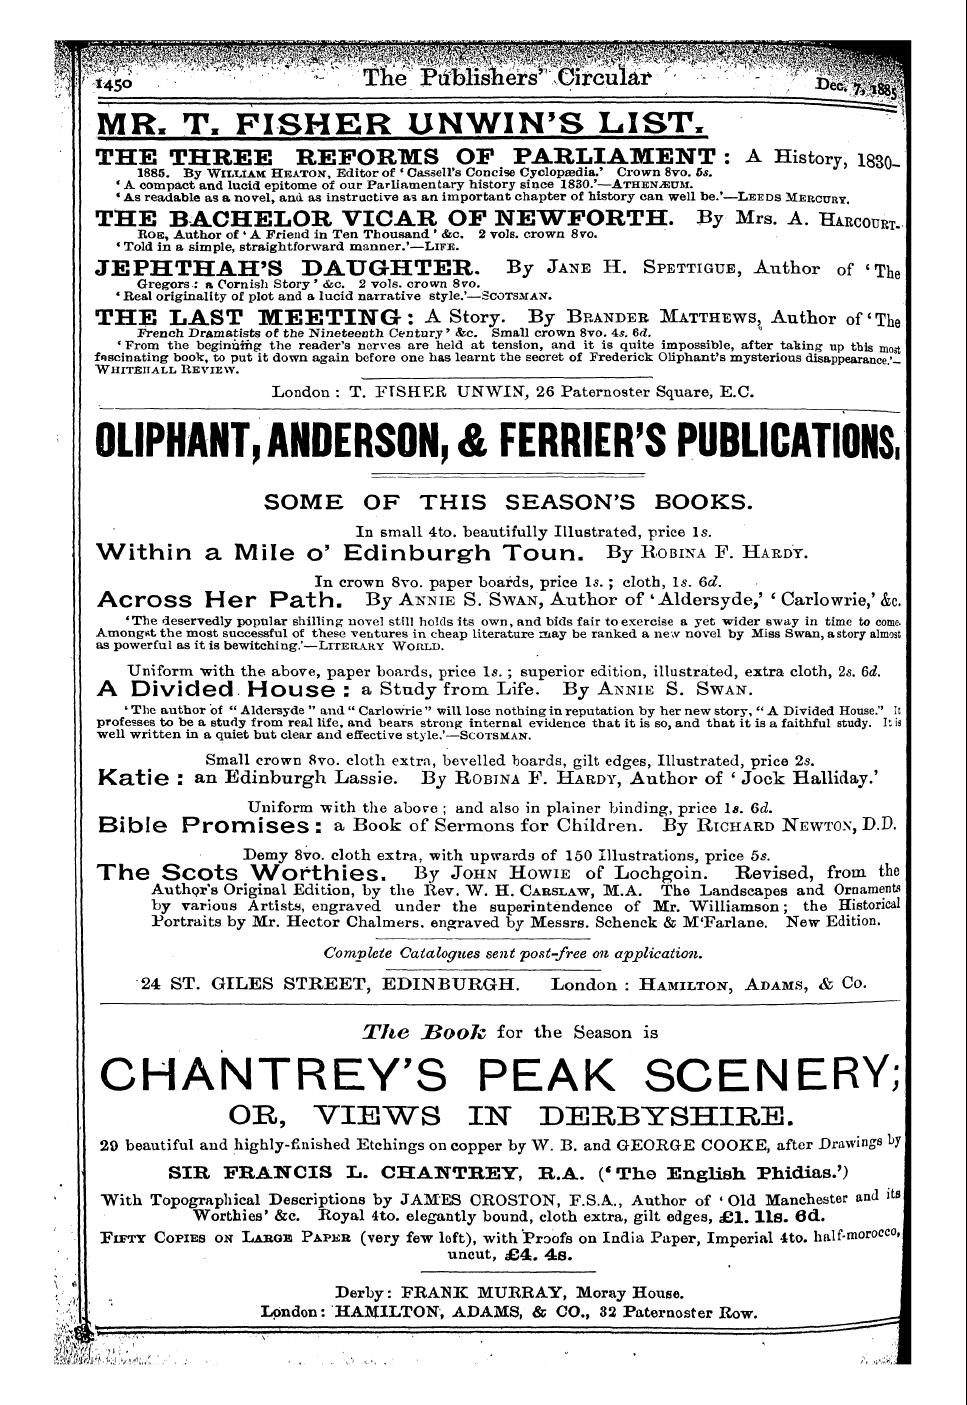 Publishers’ Circular (1880-1890): jS F Y, 1st edition: 190